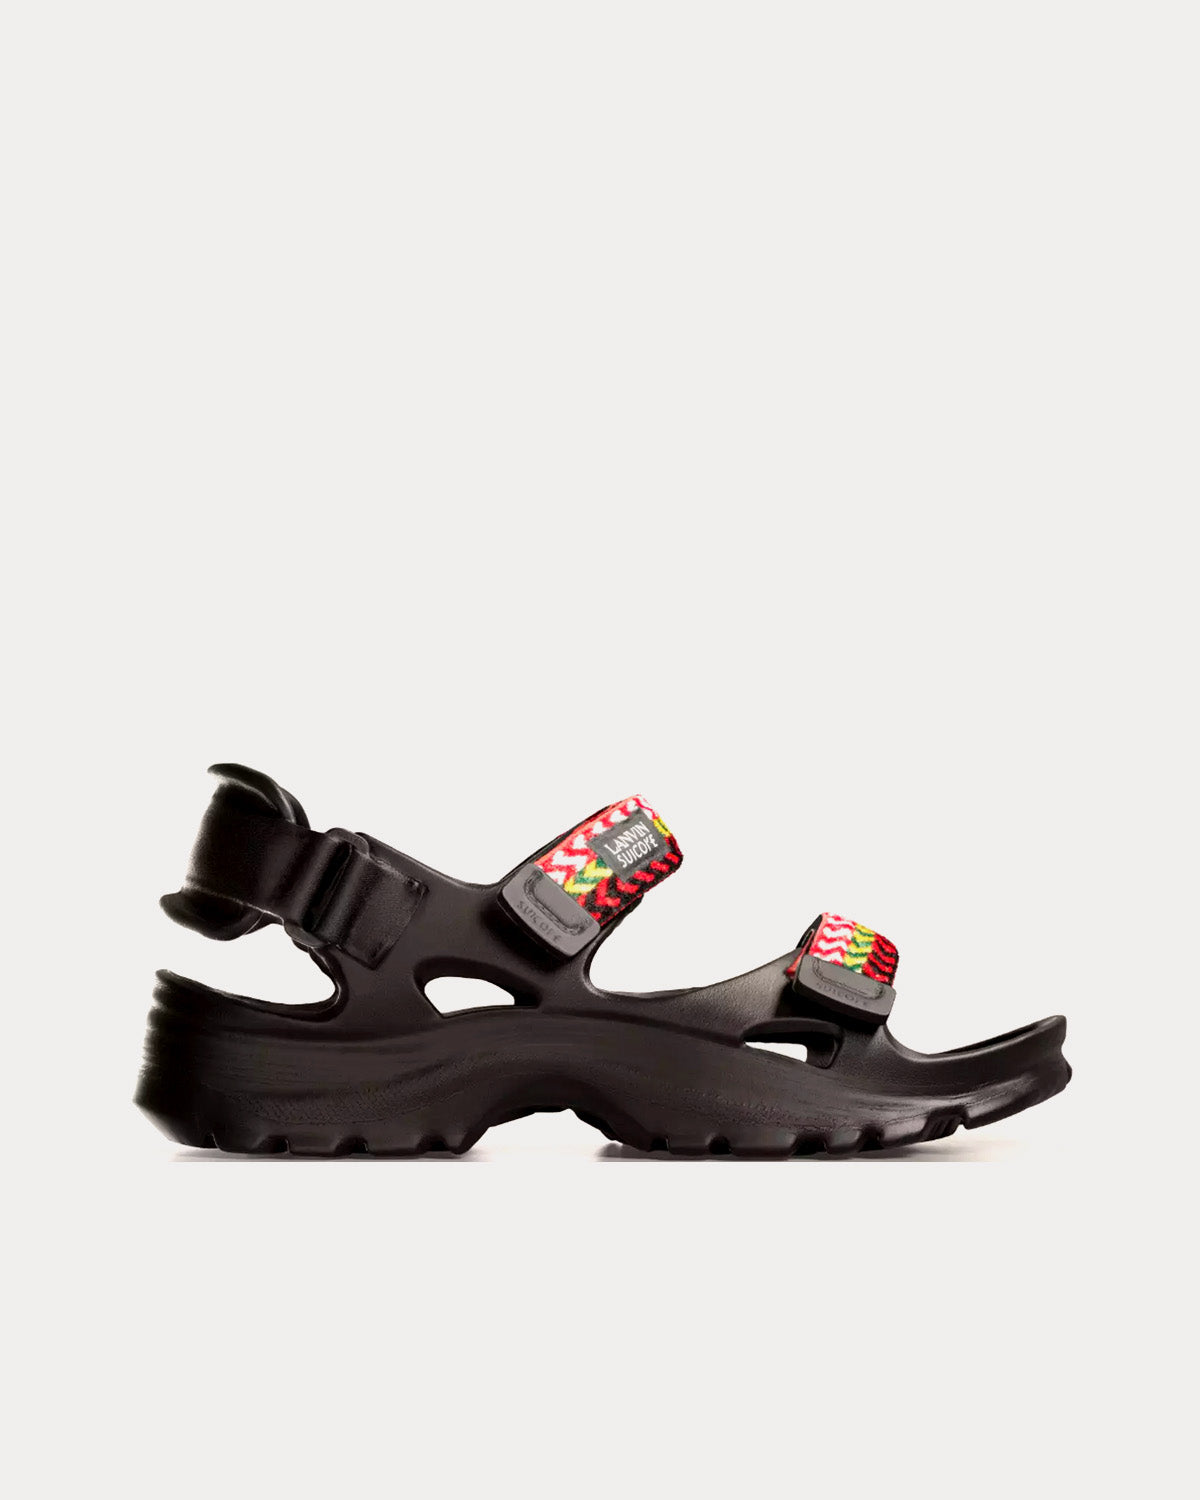 Lanvin x Suicoke - Depa V2 Black Sandals